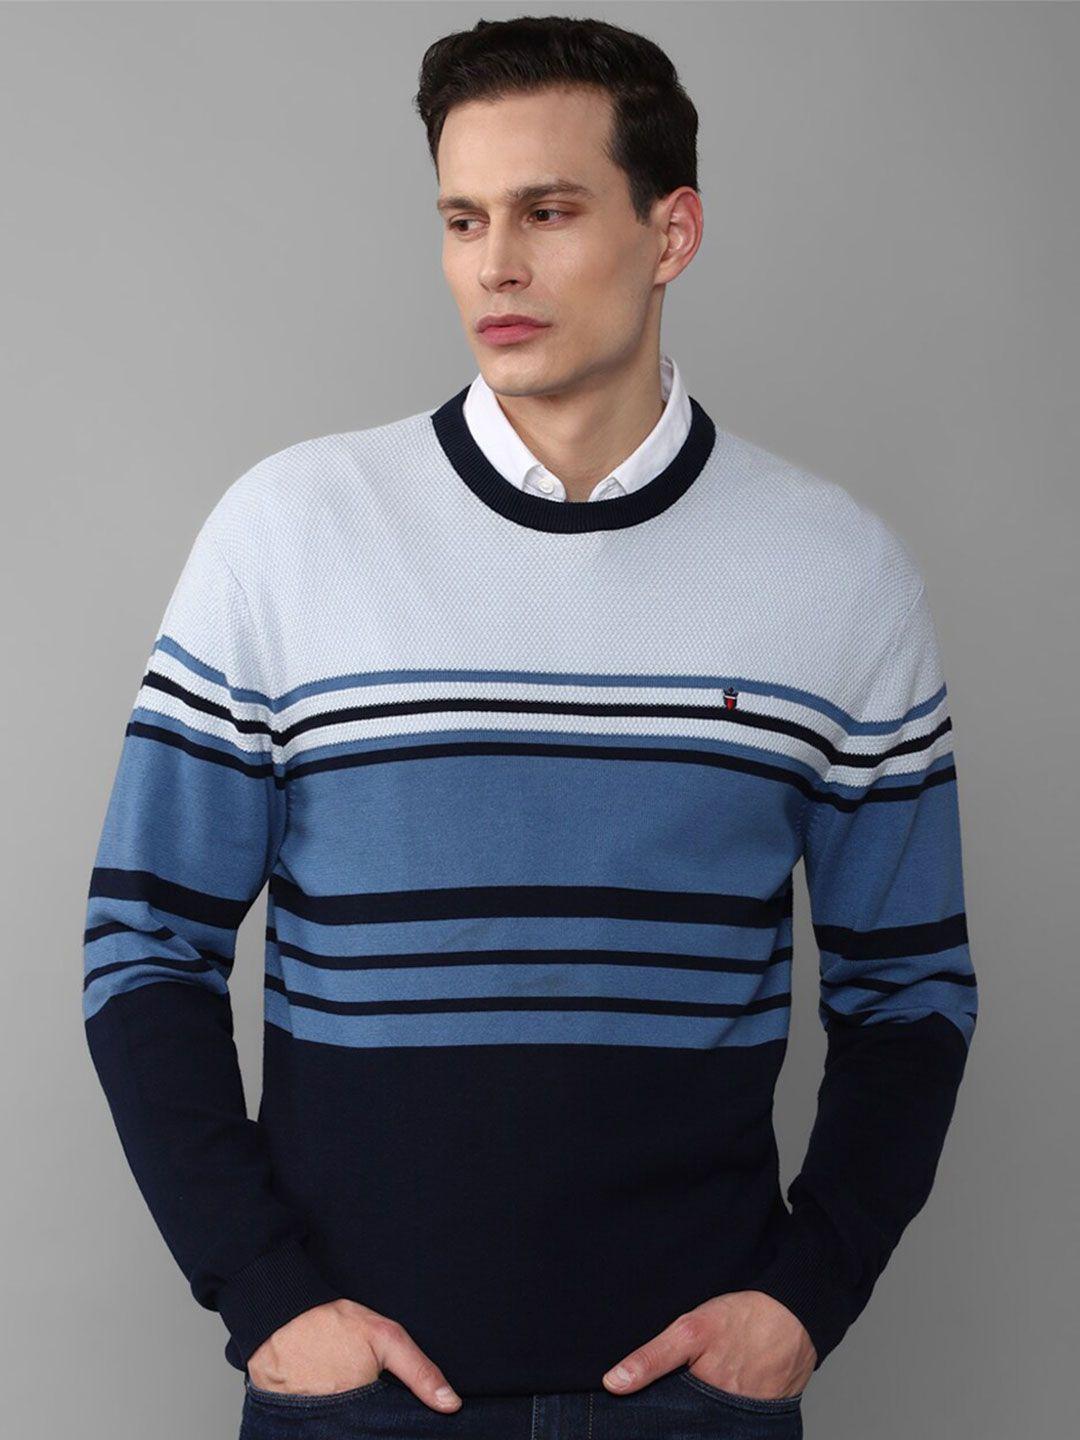 louis-philippe-jeans-men-pure-cotton-blue-&-black-striped-printed-pullover